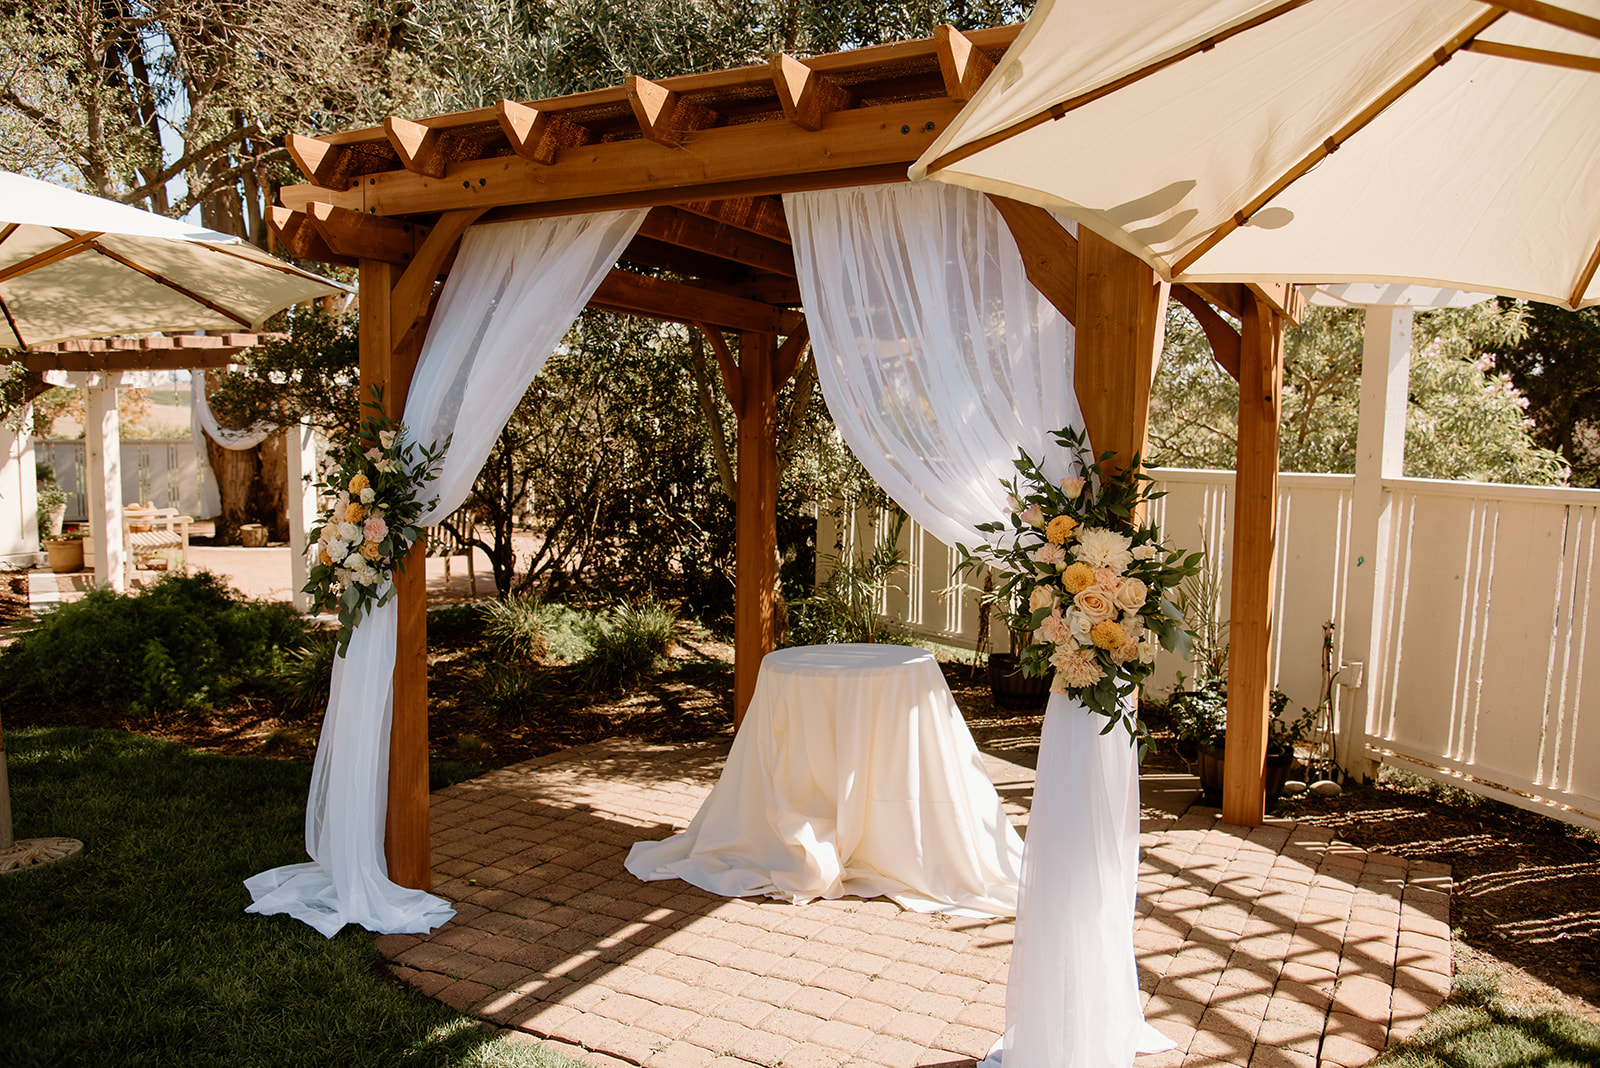 Sydney Jai Photography - Petaluma wedding, wedding ceremony, petaluma wedding venue